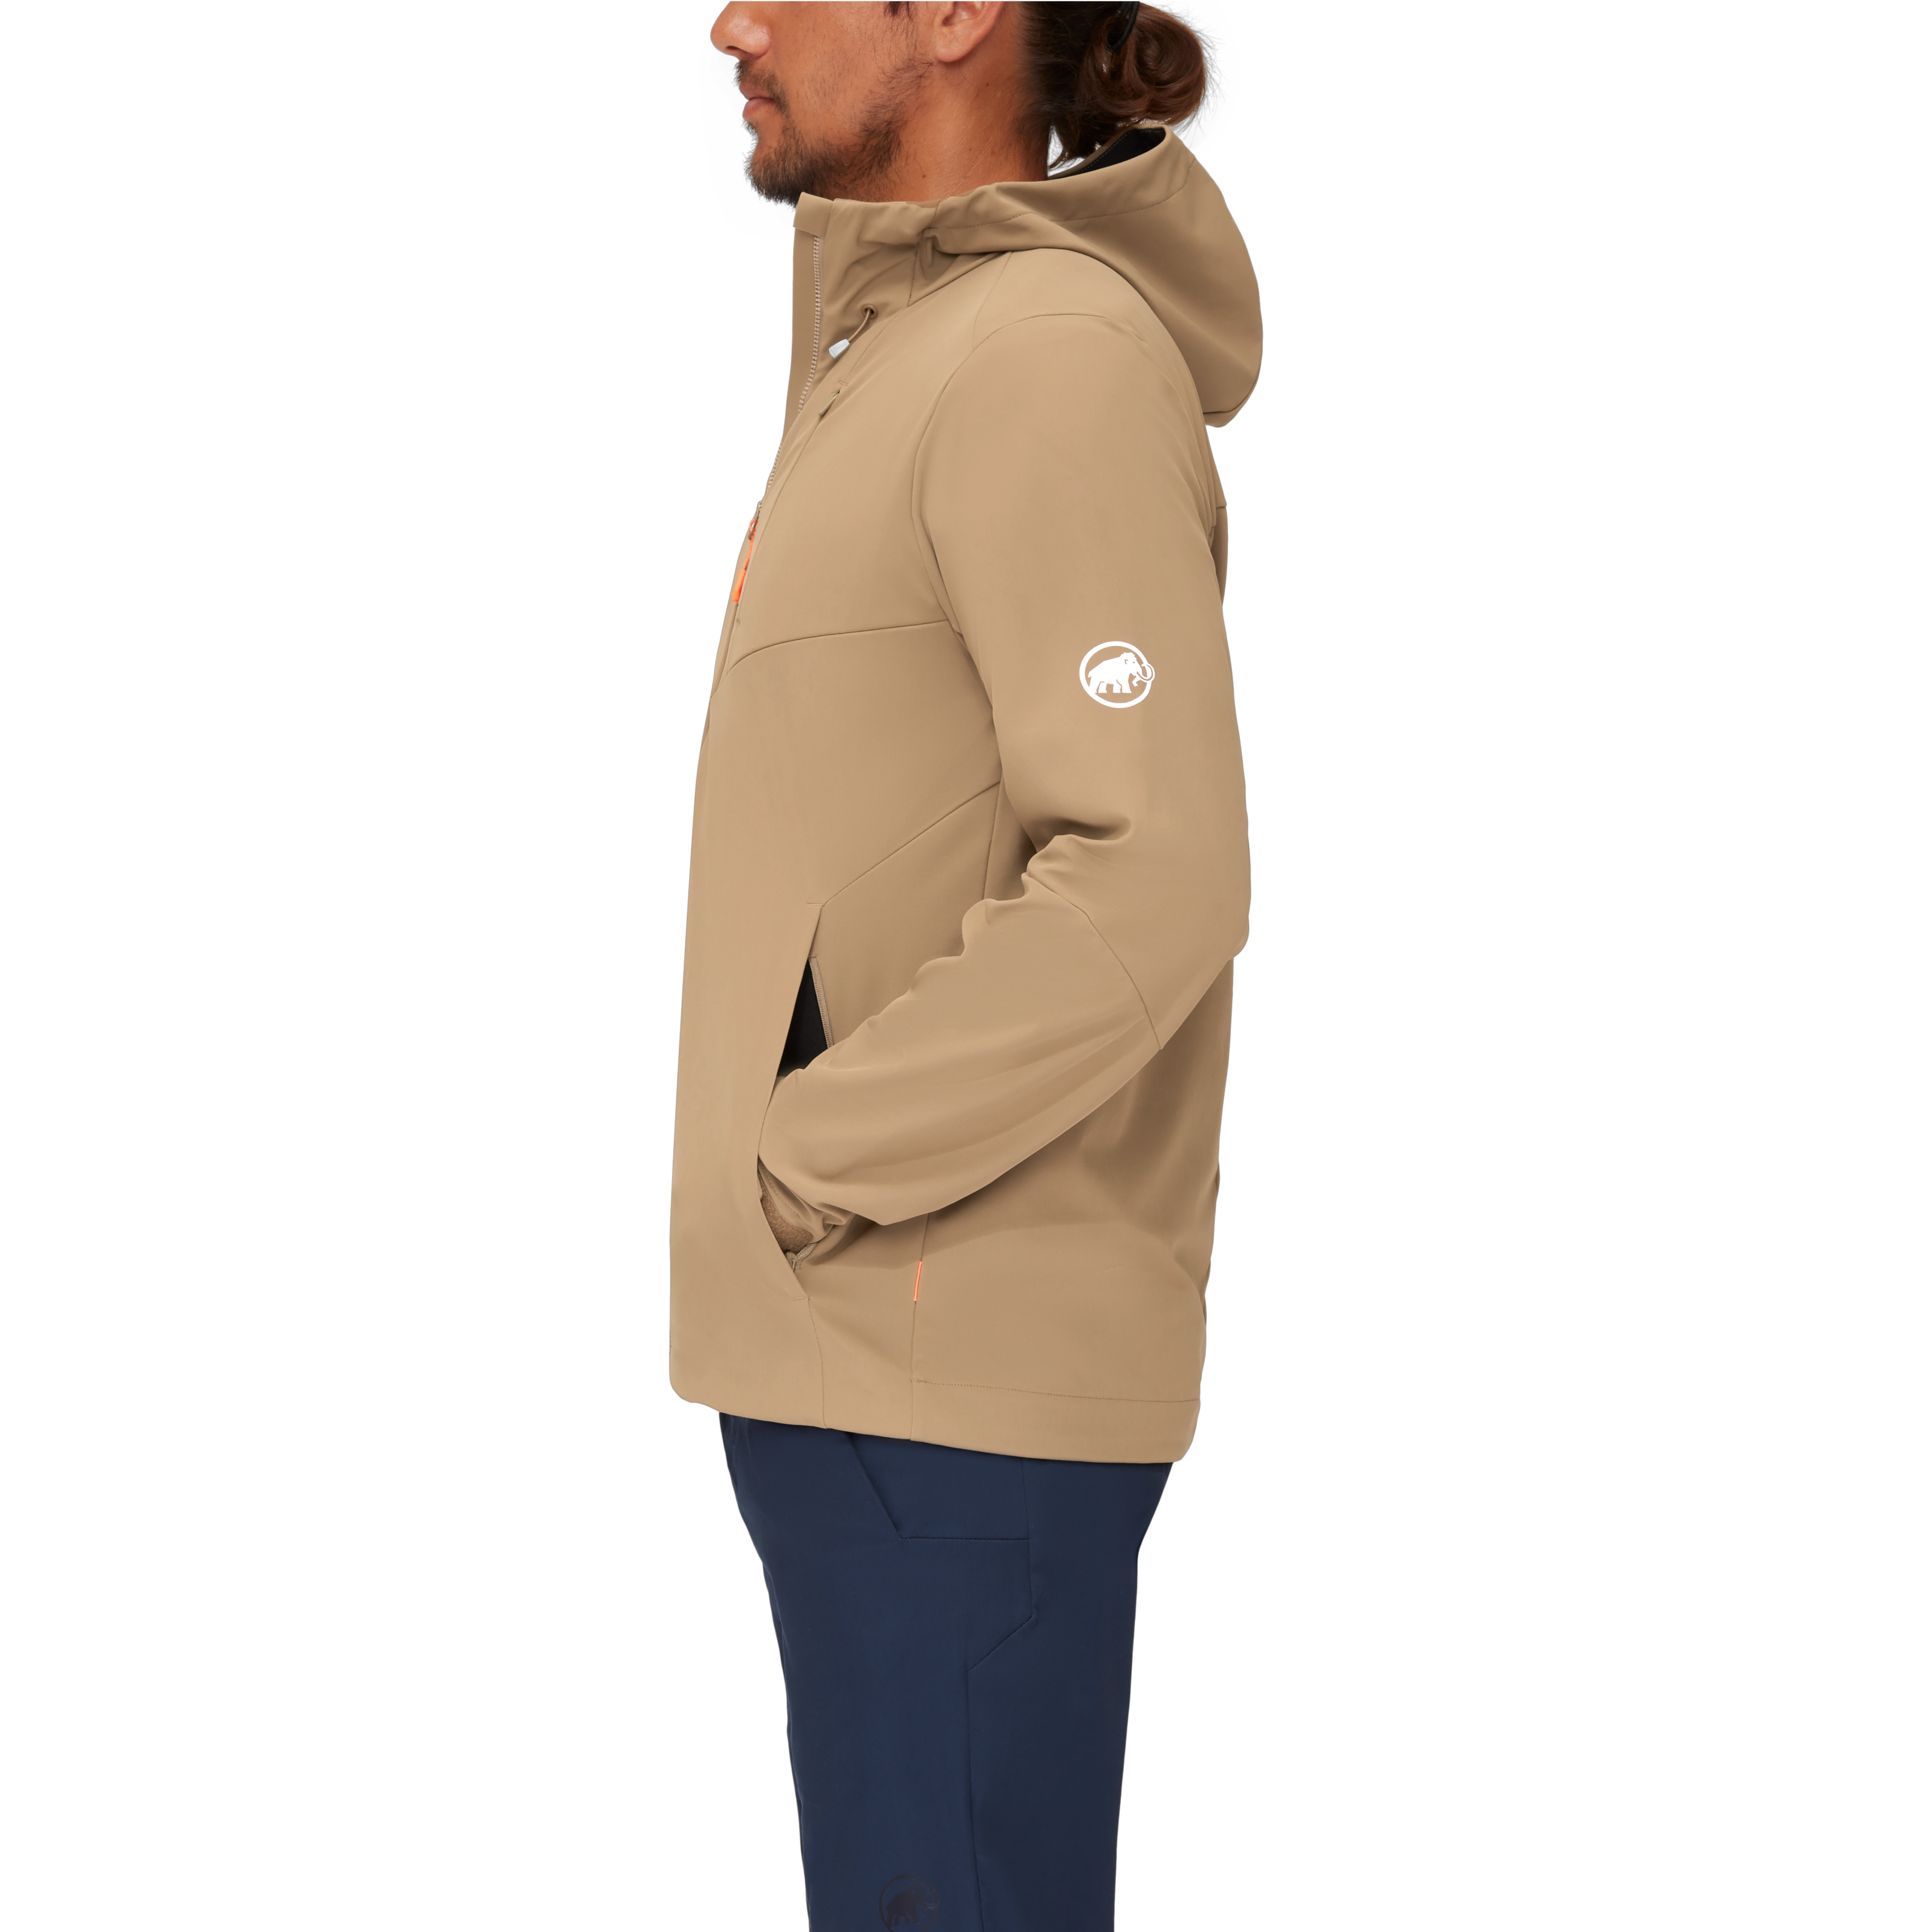 Sapuen SO Hooded Jacket Men product image